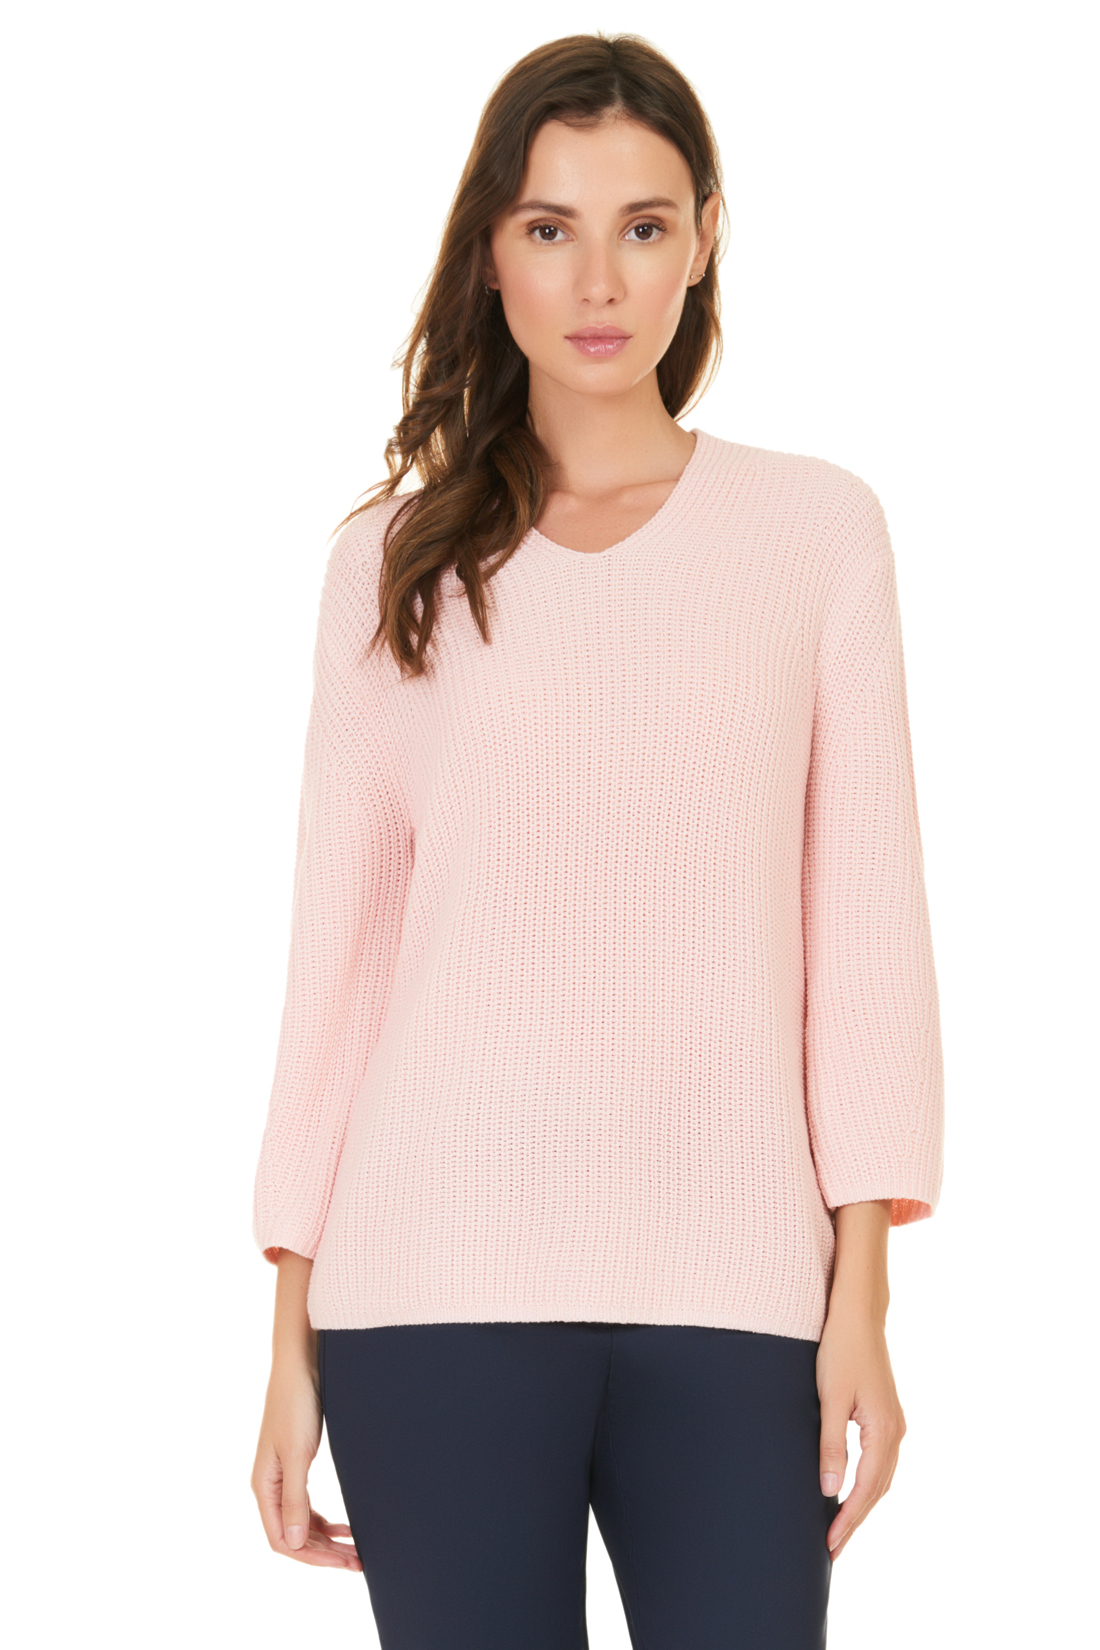 Пуловер оригинального кроя (арт. baon B137504), размер XXL, цвет розовый Пуловер оригинального кроя (арт. baon B137504) - фото 1